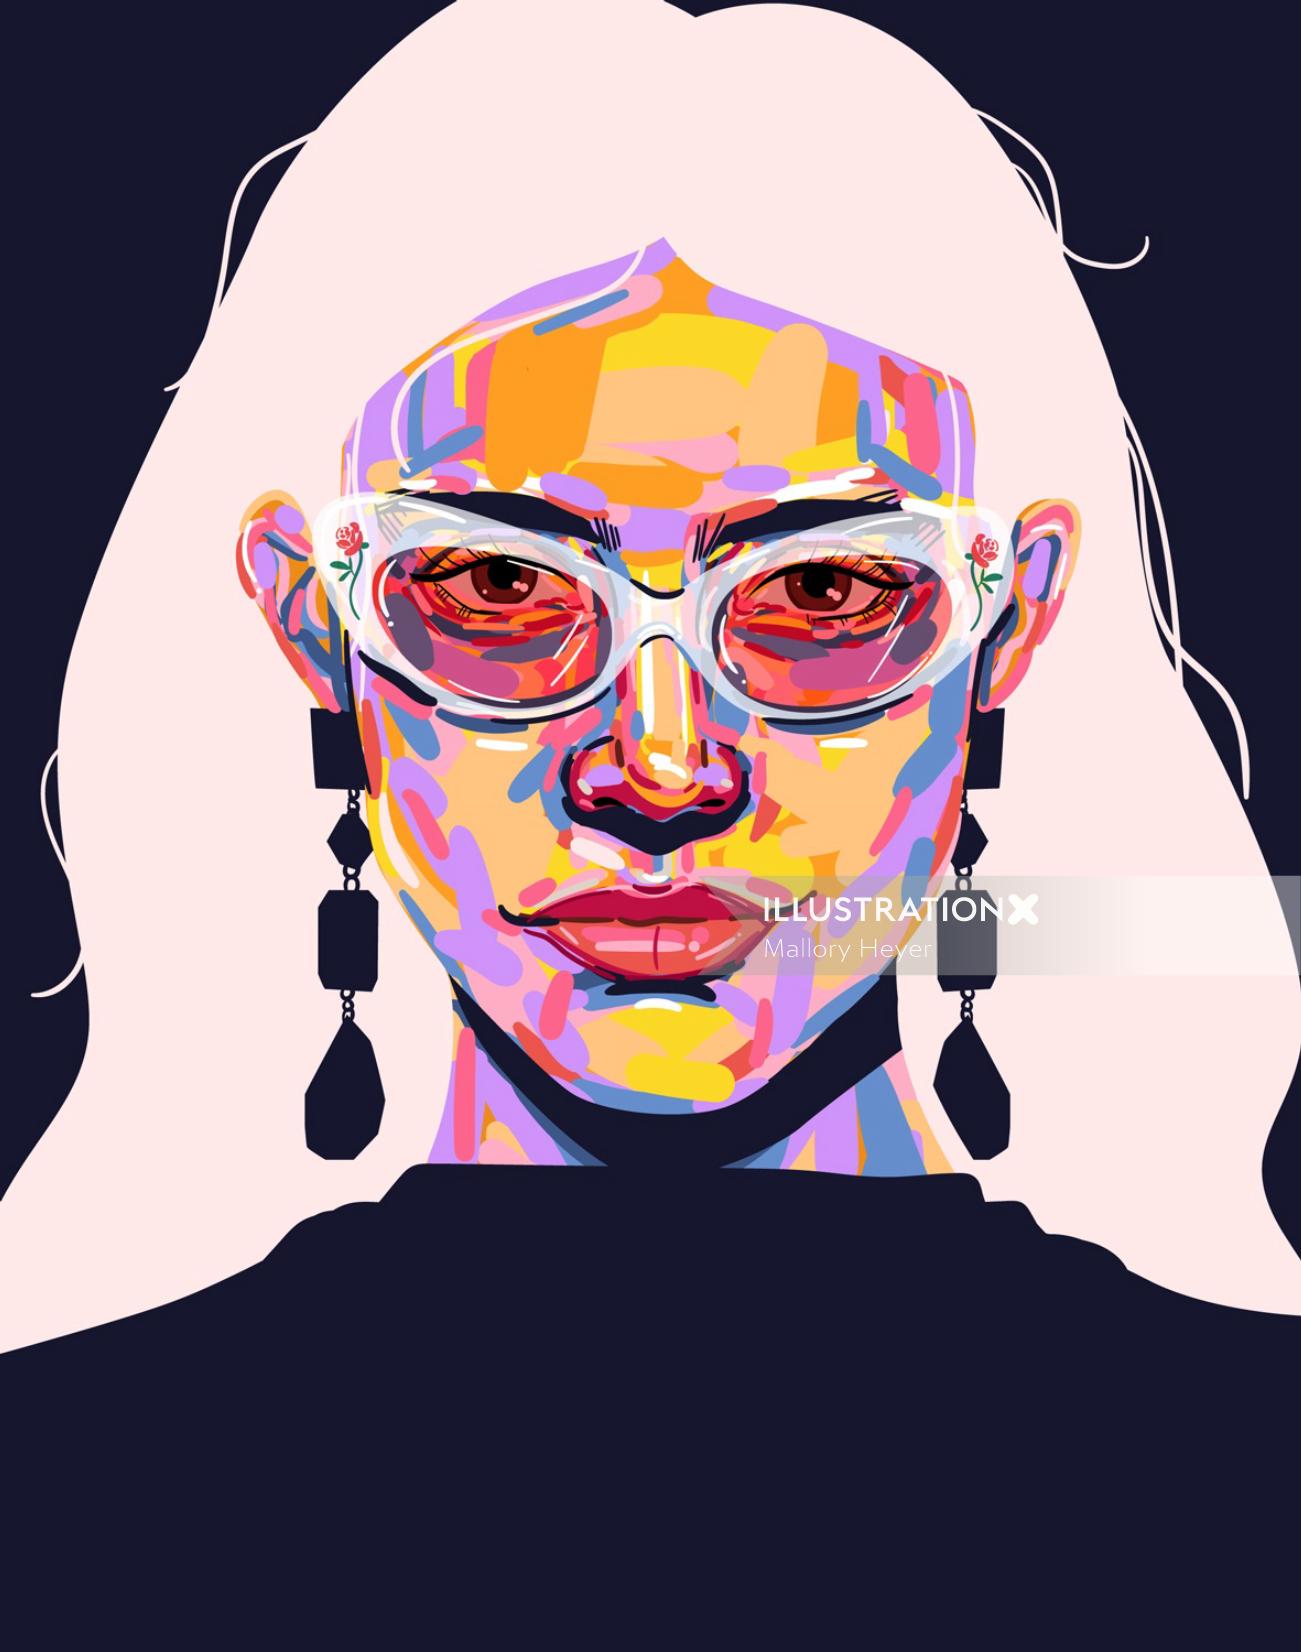 Portrait illustration of a woman wearing sunglasses